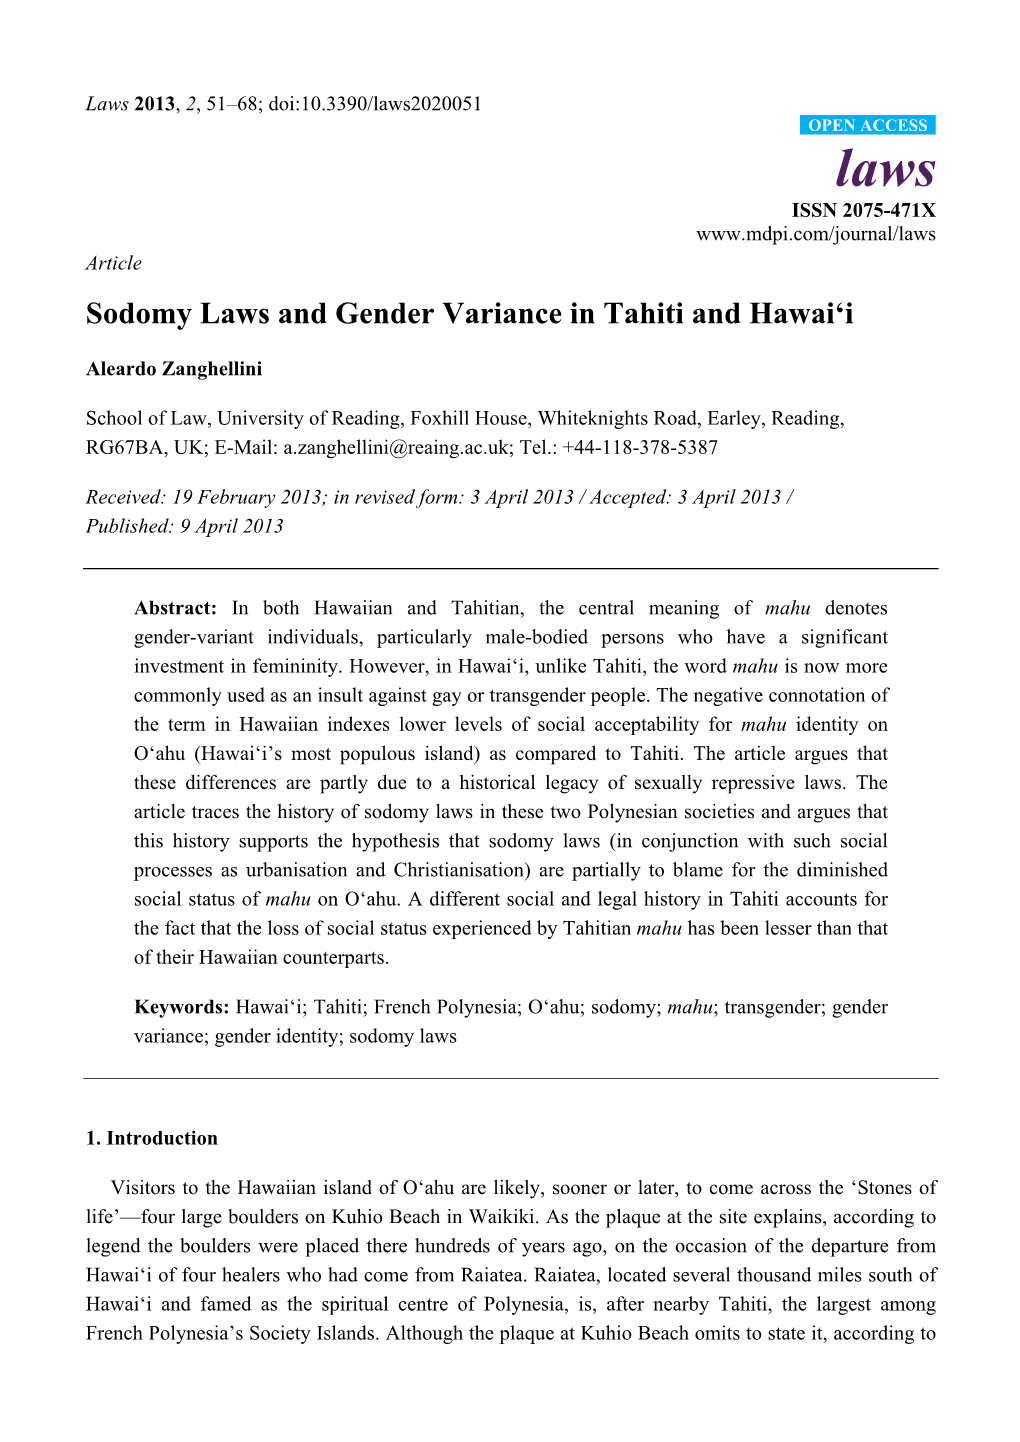 Sodomy Laws and Gender Variance in Tahiti and Hawai'i